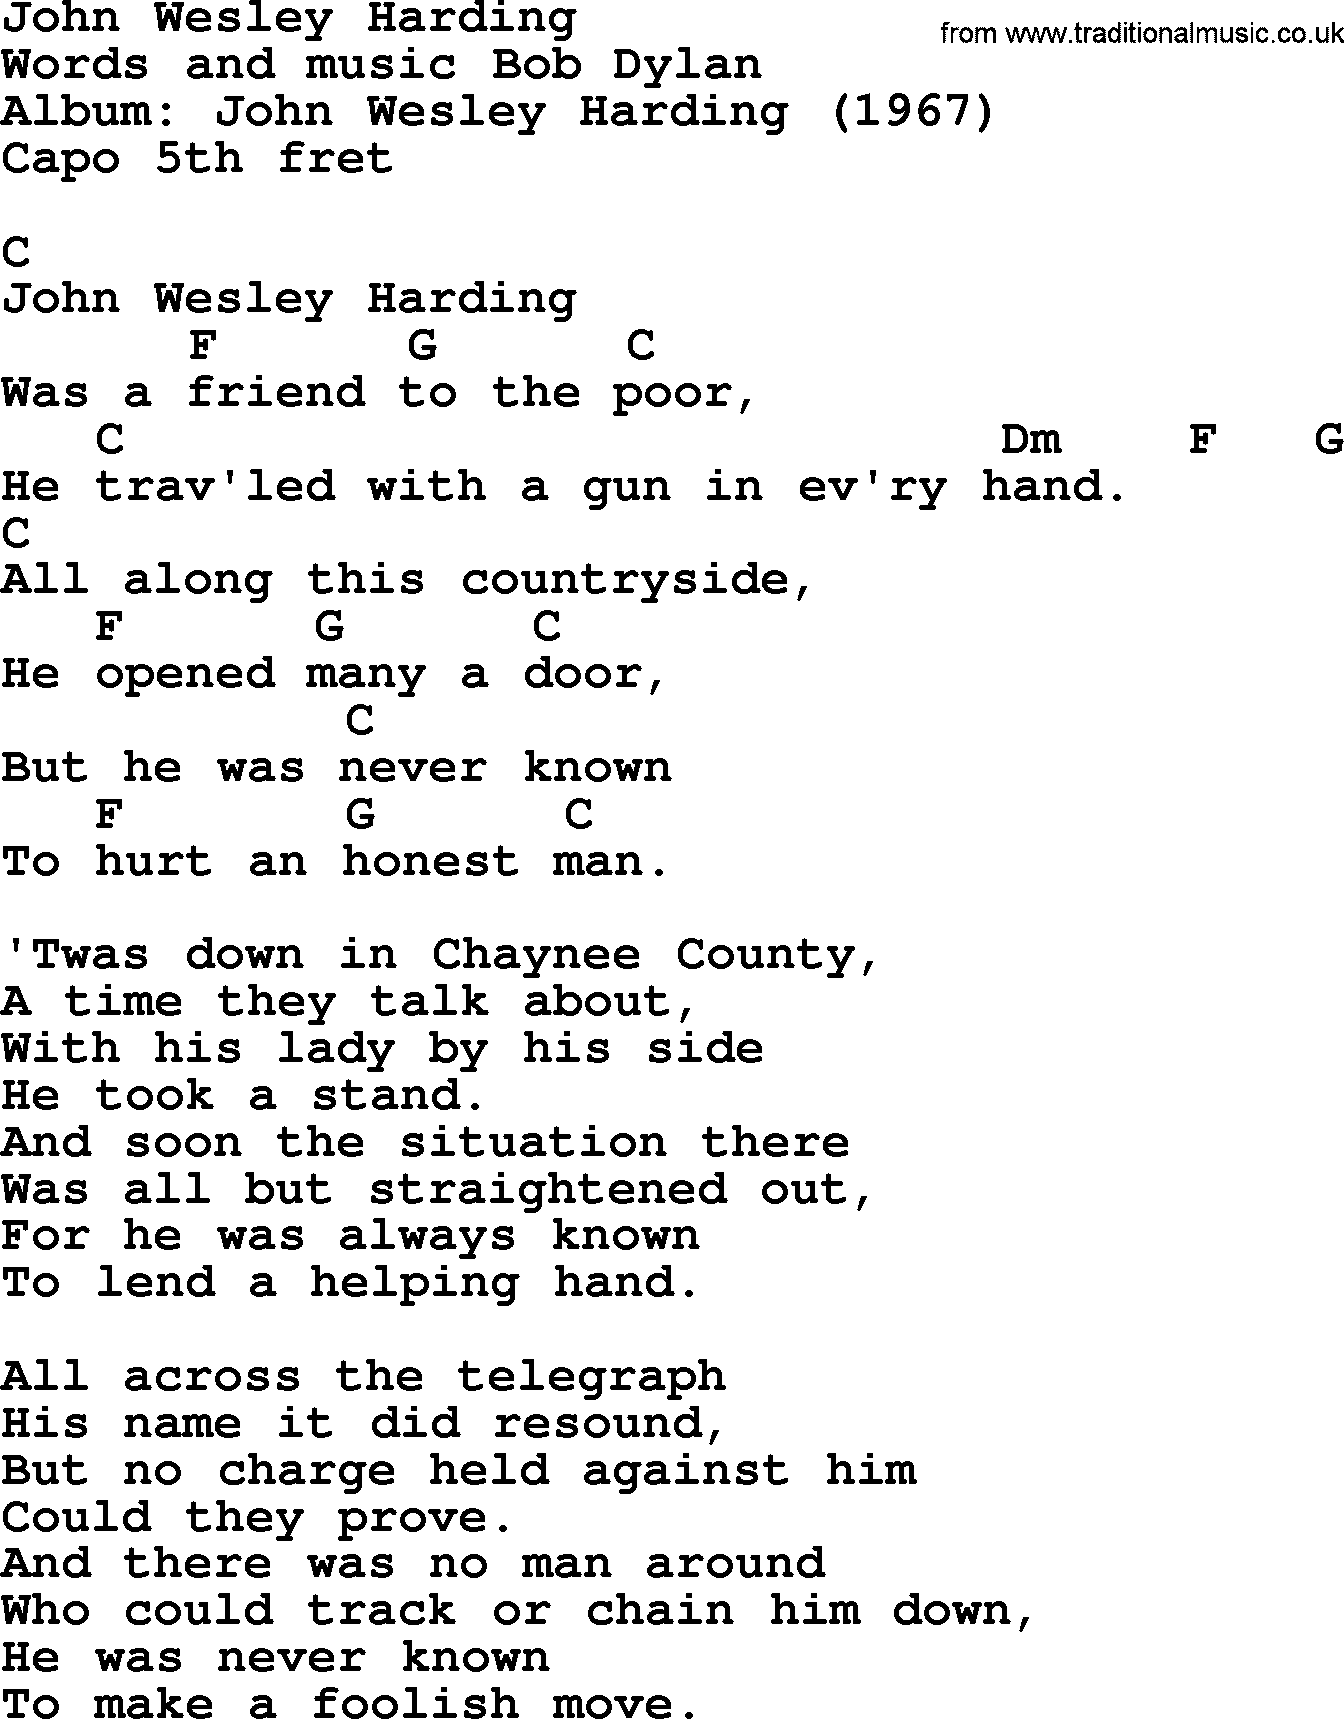 Bob Dylan song, lyrics with chords - John Wesley Harding